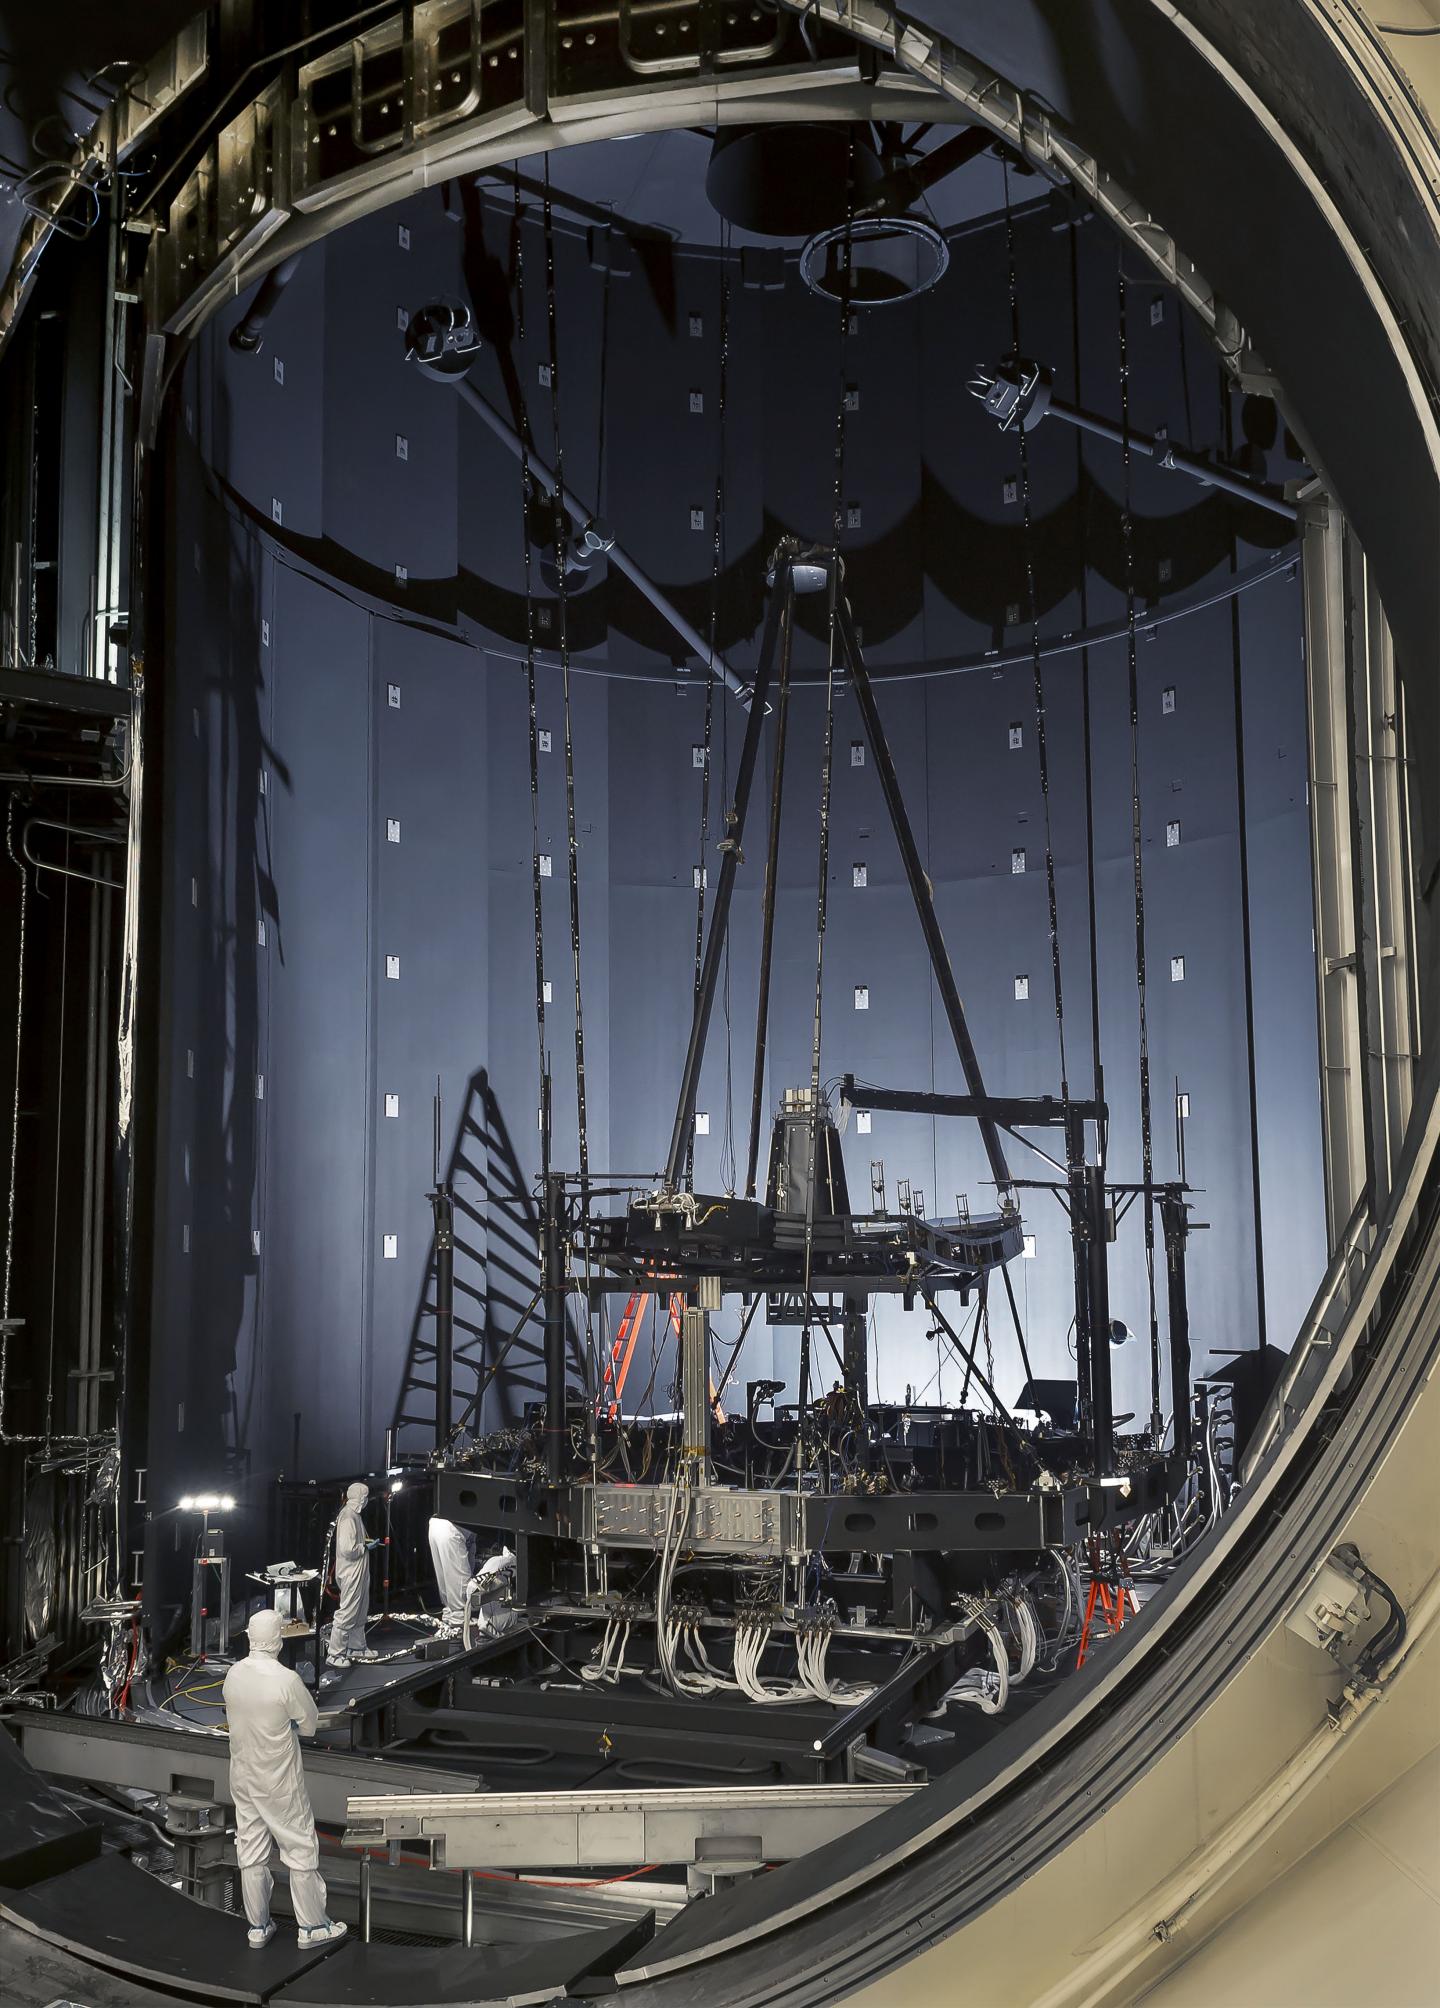 Engineers Inspect the James Webb Space Telescope's pathfinder telescope